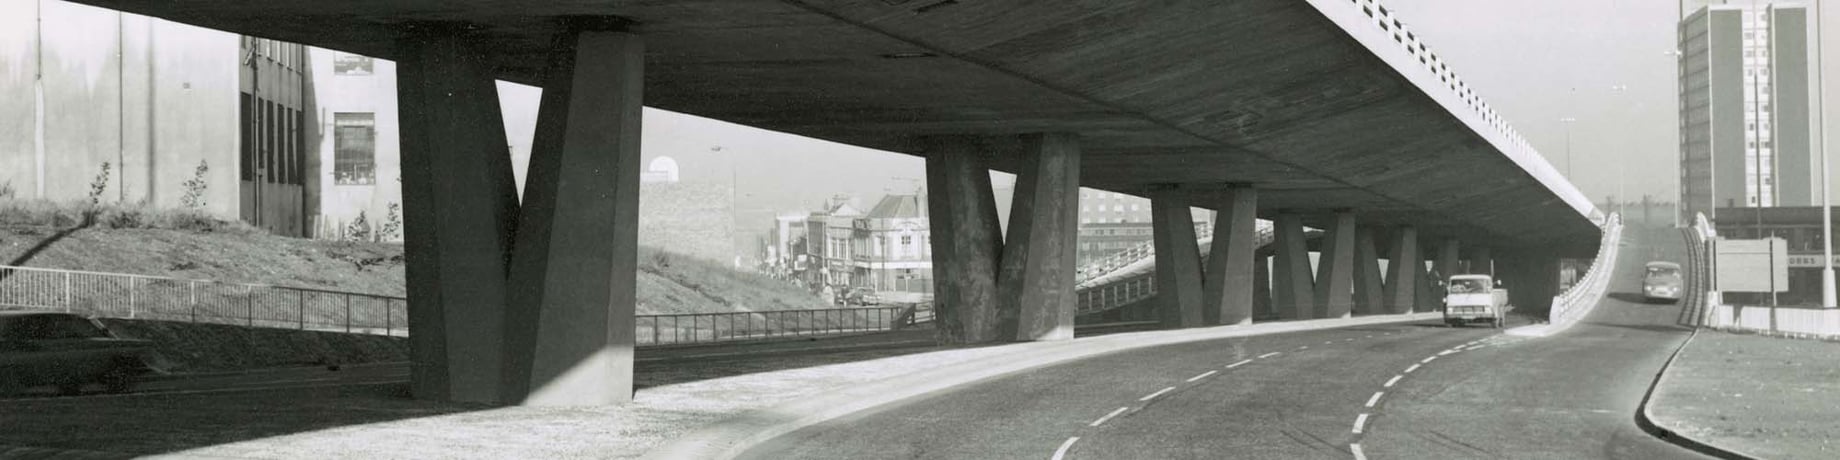 Gateshead Viaduct